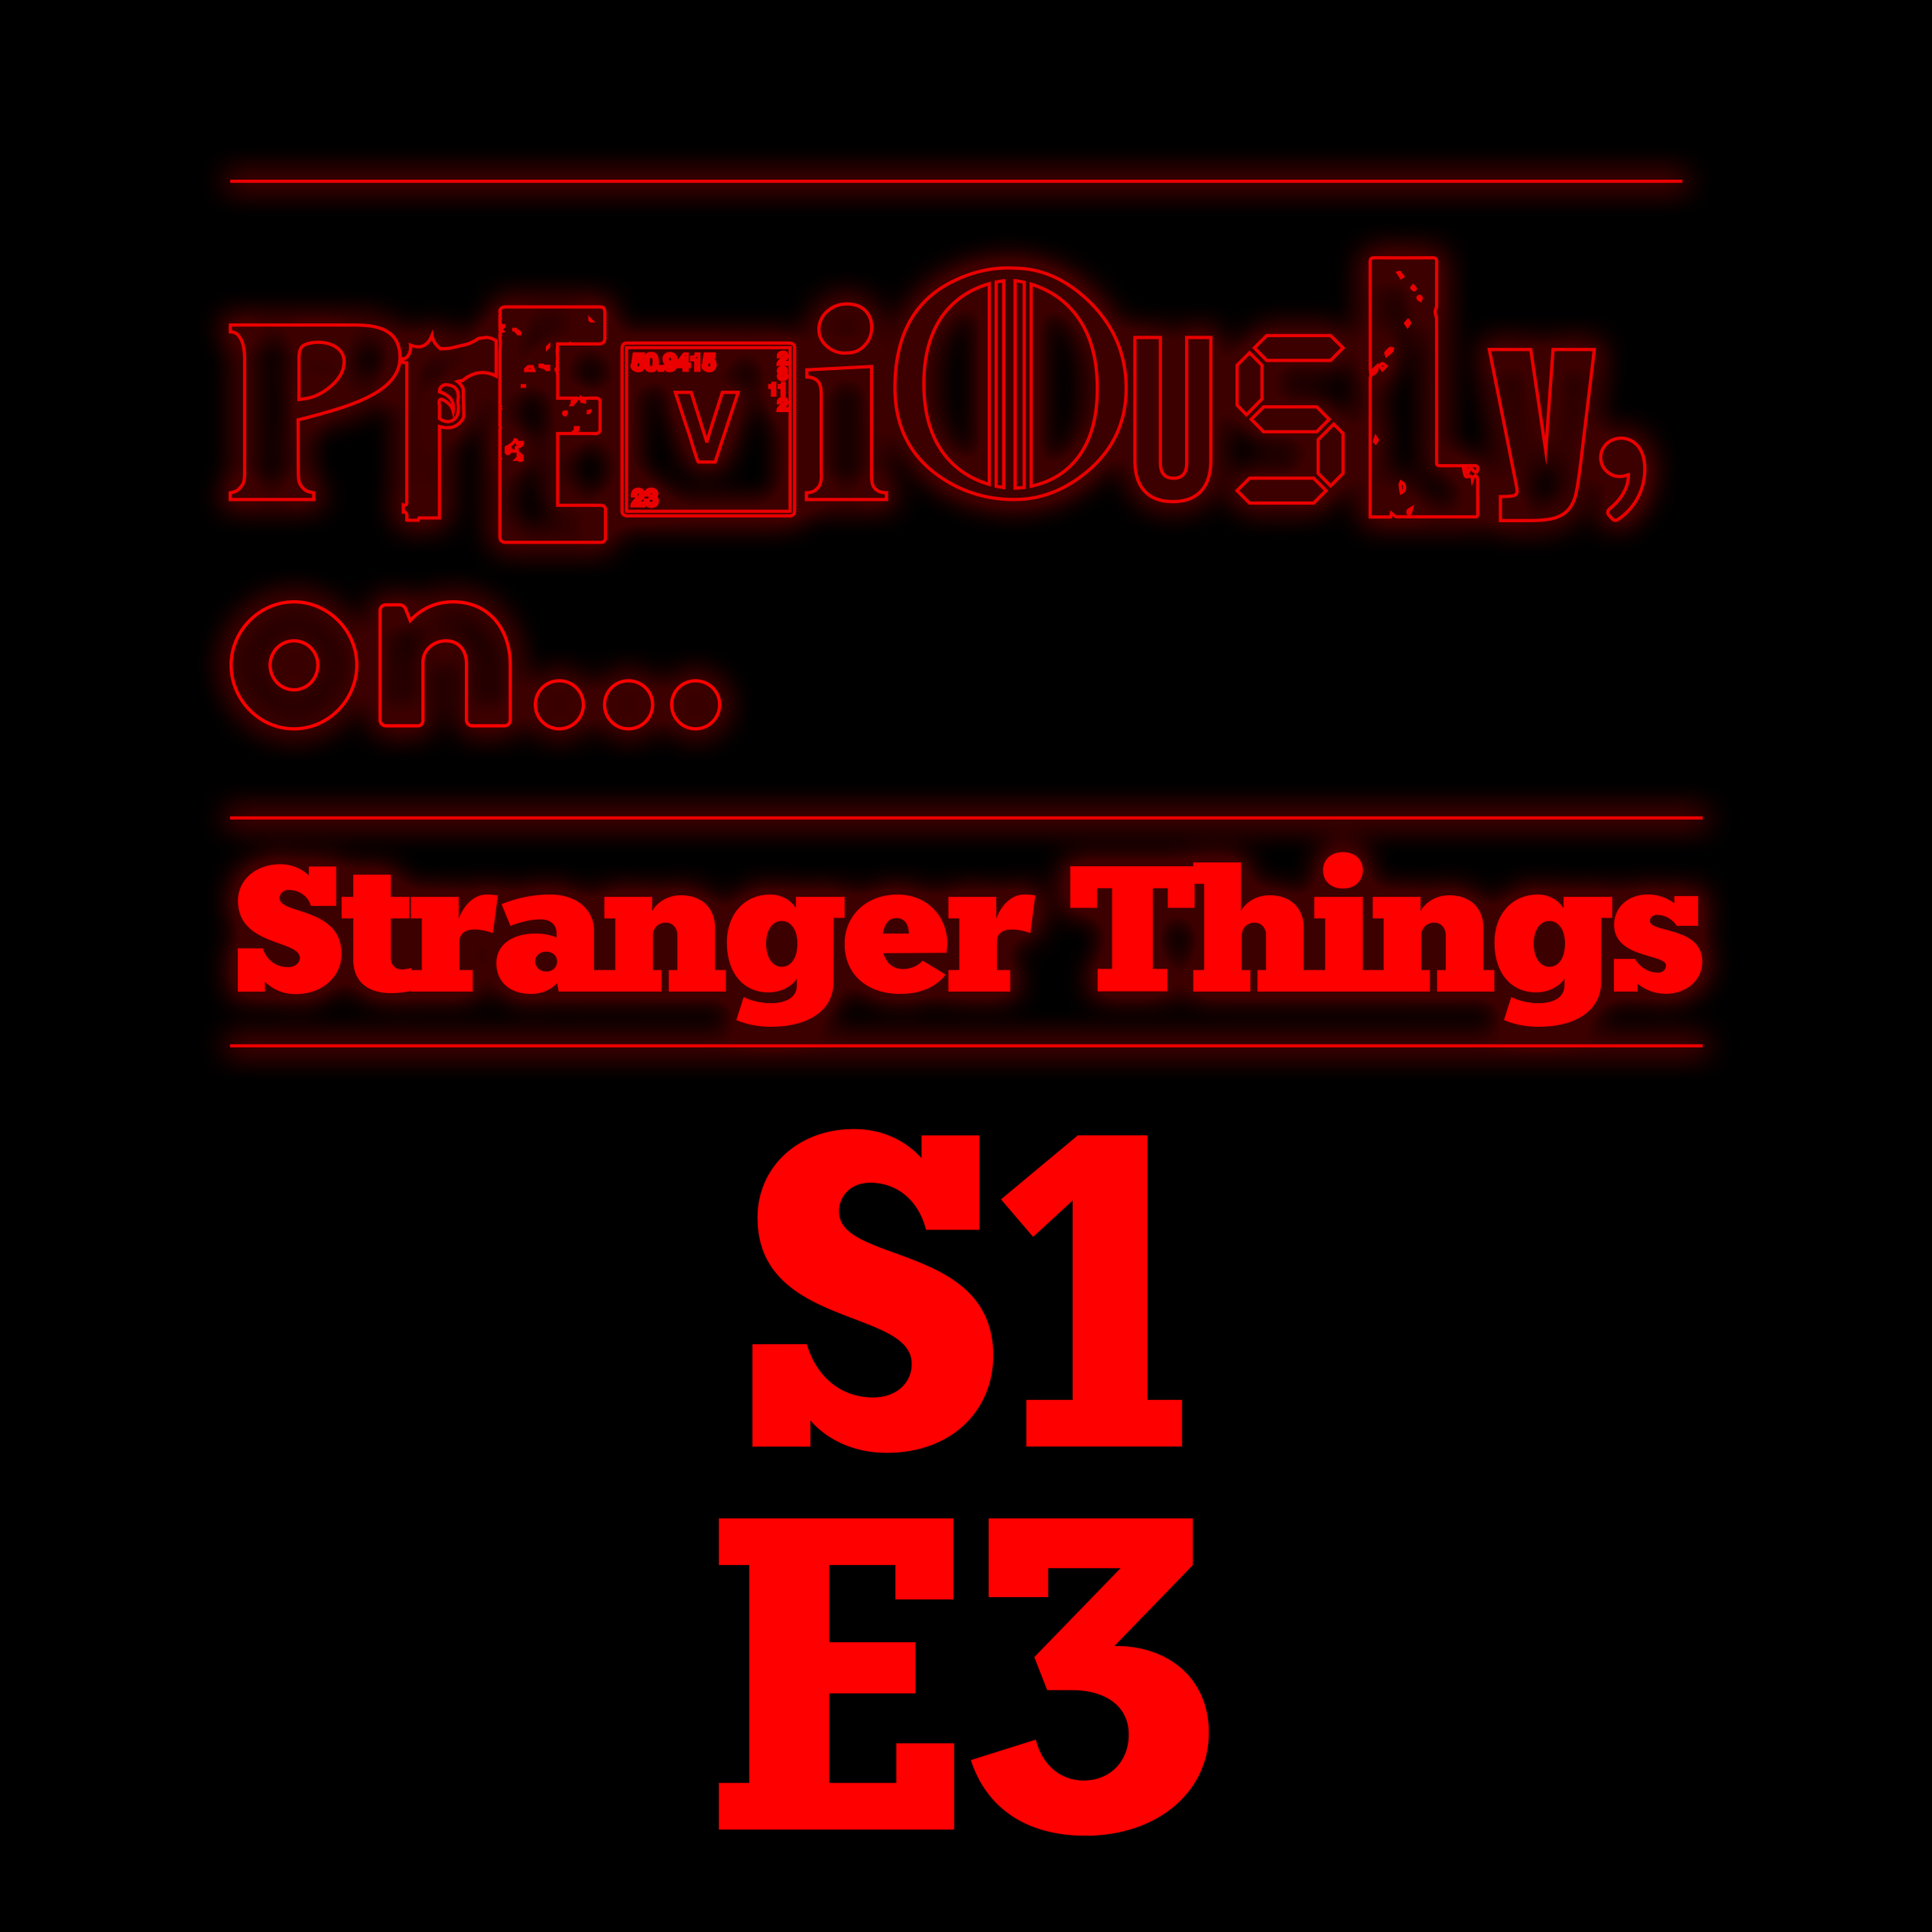 Stranger Things S1E3 - Holly, Jolly